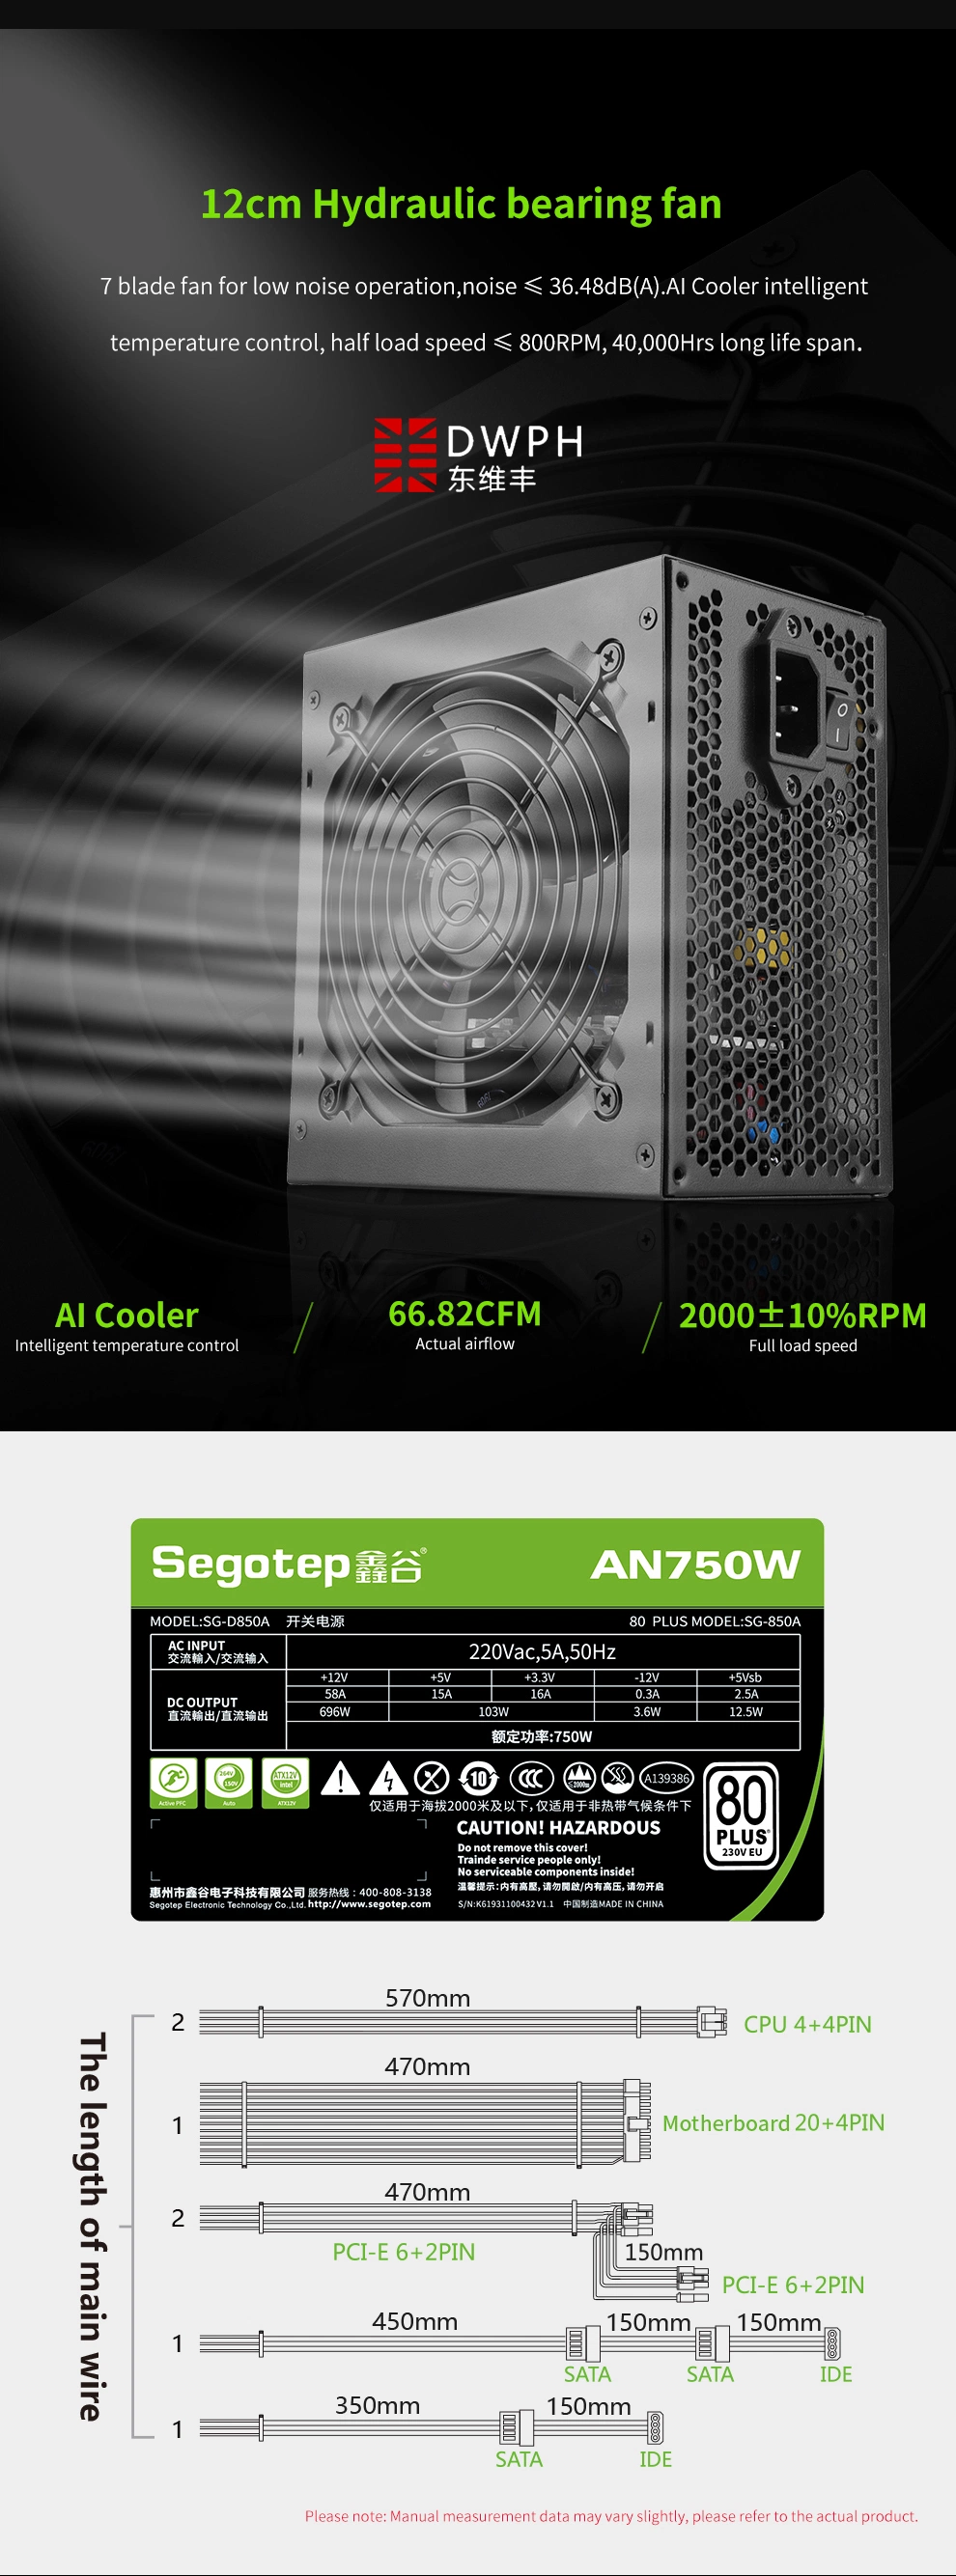 Segotep-Apfc-Two-Transistor-Carry 2*CPU (4+4) Pin Port-Gaming-ATX-750W-80-Plus-White-Switching-Power-Supply